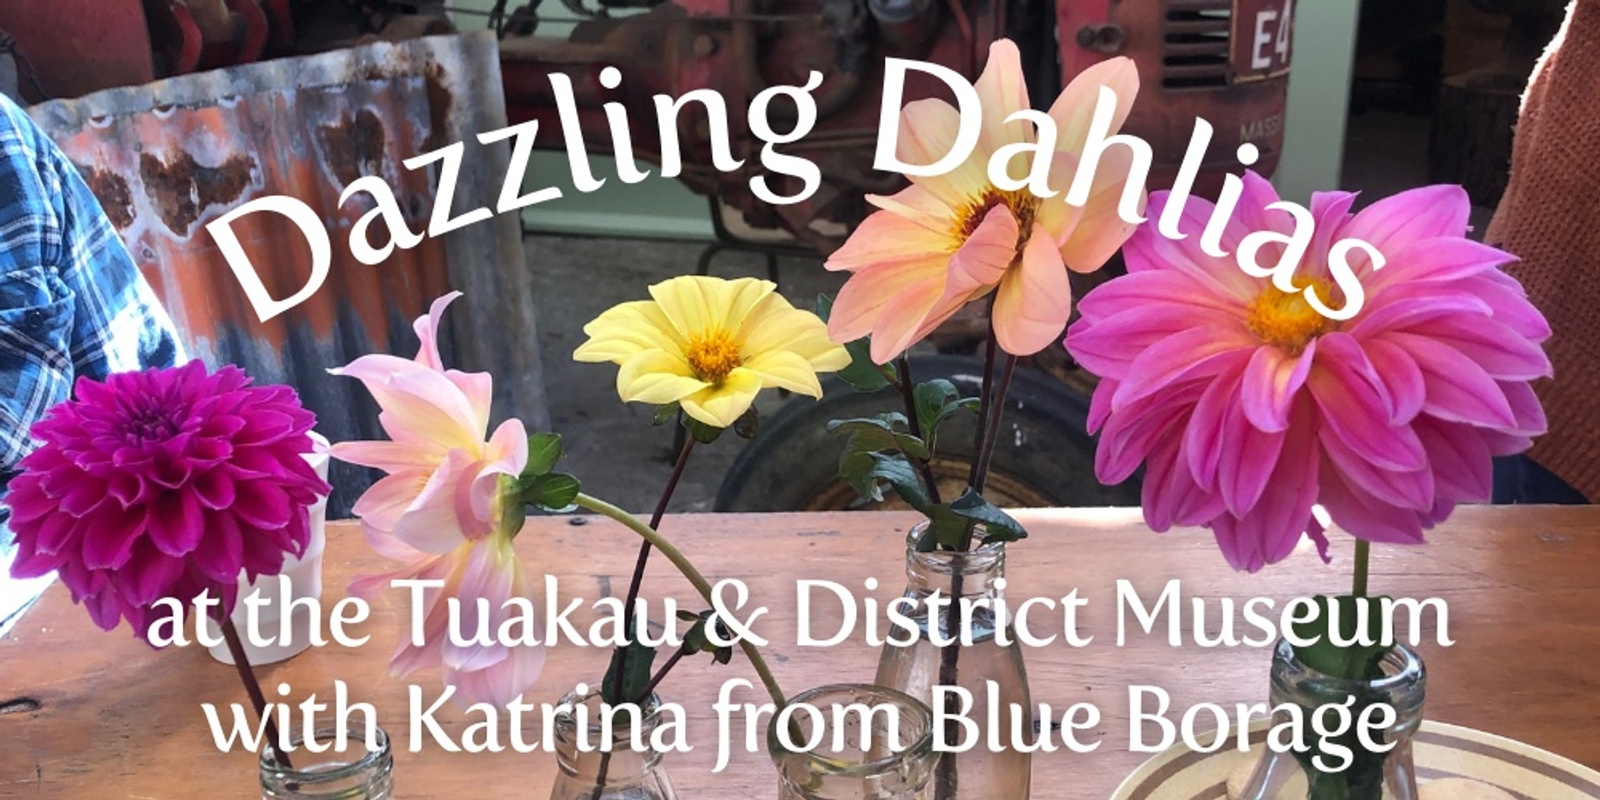 'Dazzling Dahlias' at the Tuakau & District Museum